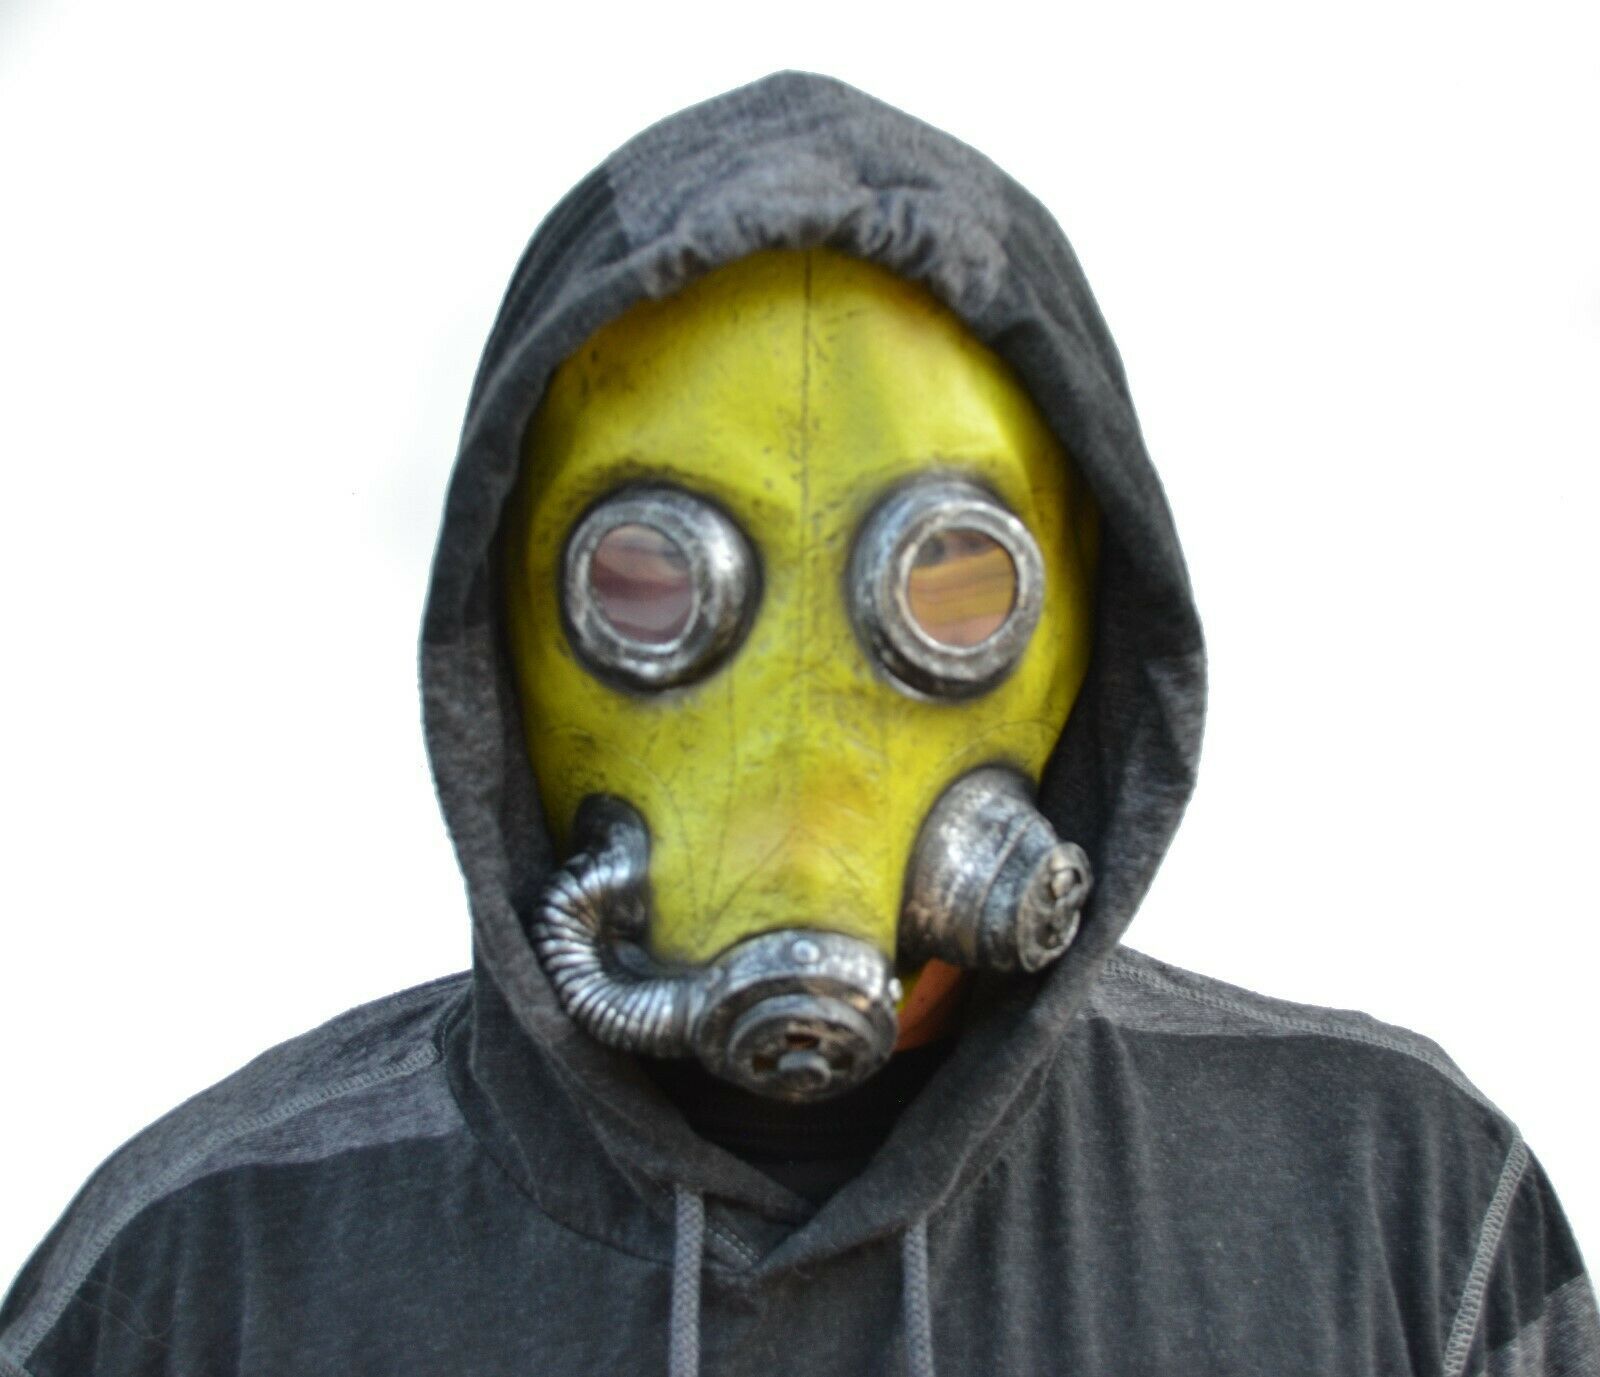 smoke black gas mask zombie biohazard apocalypse costume